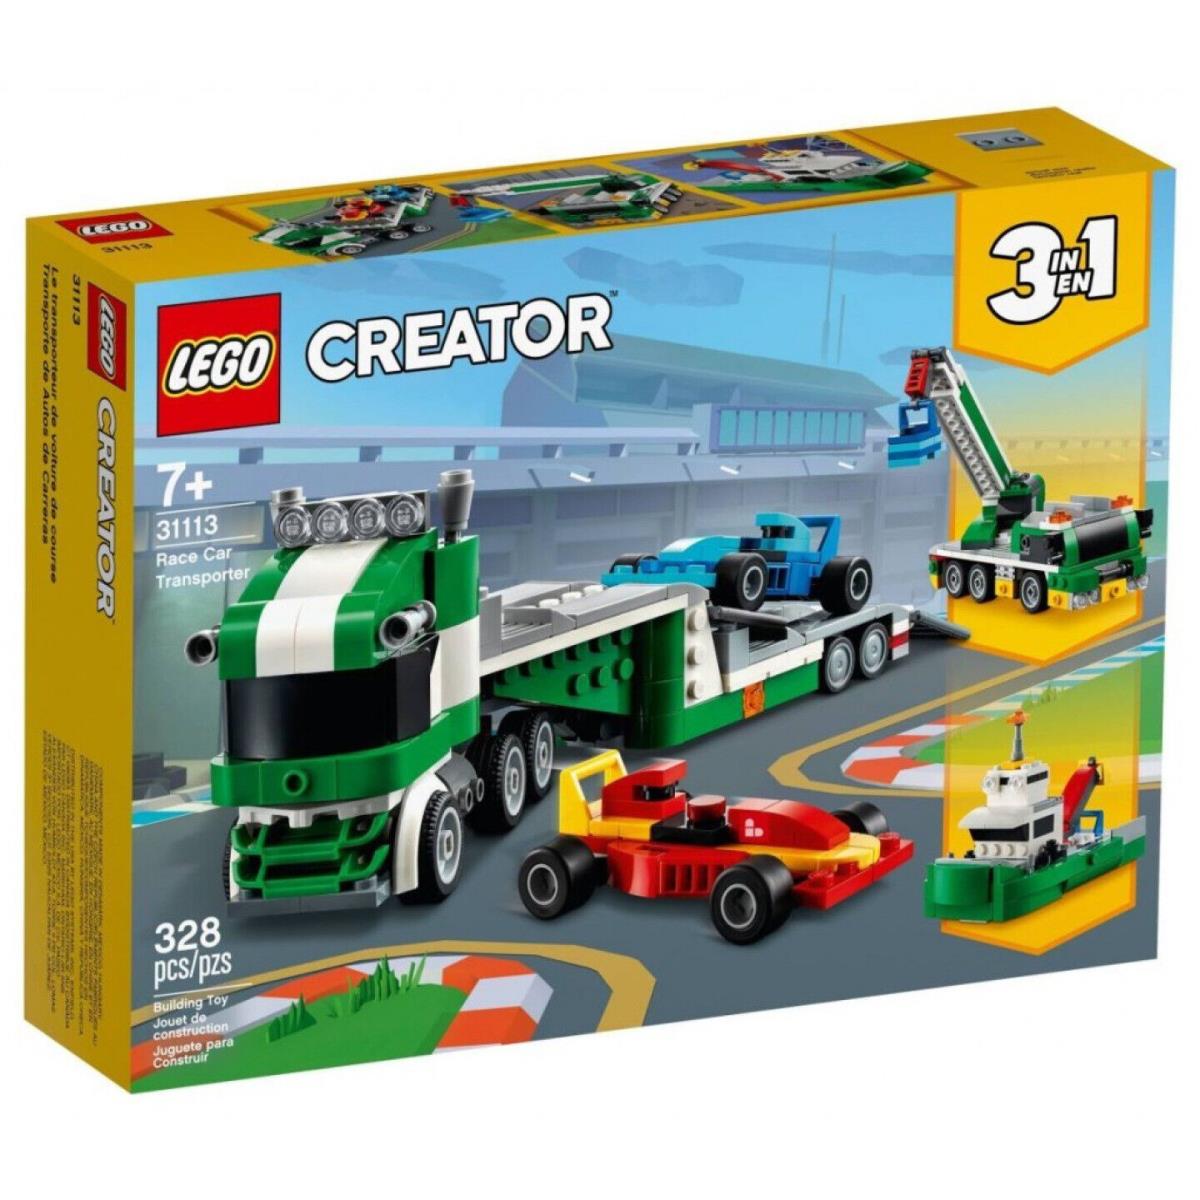 Lego Creator 3in1 Race Car Transporter 31113 Building Kit 328 Pieces